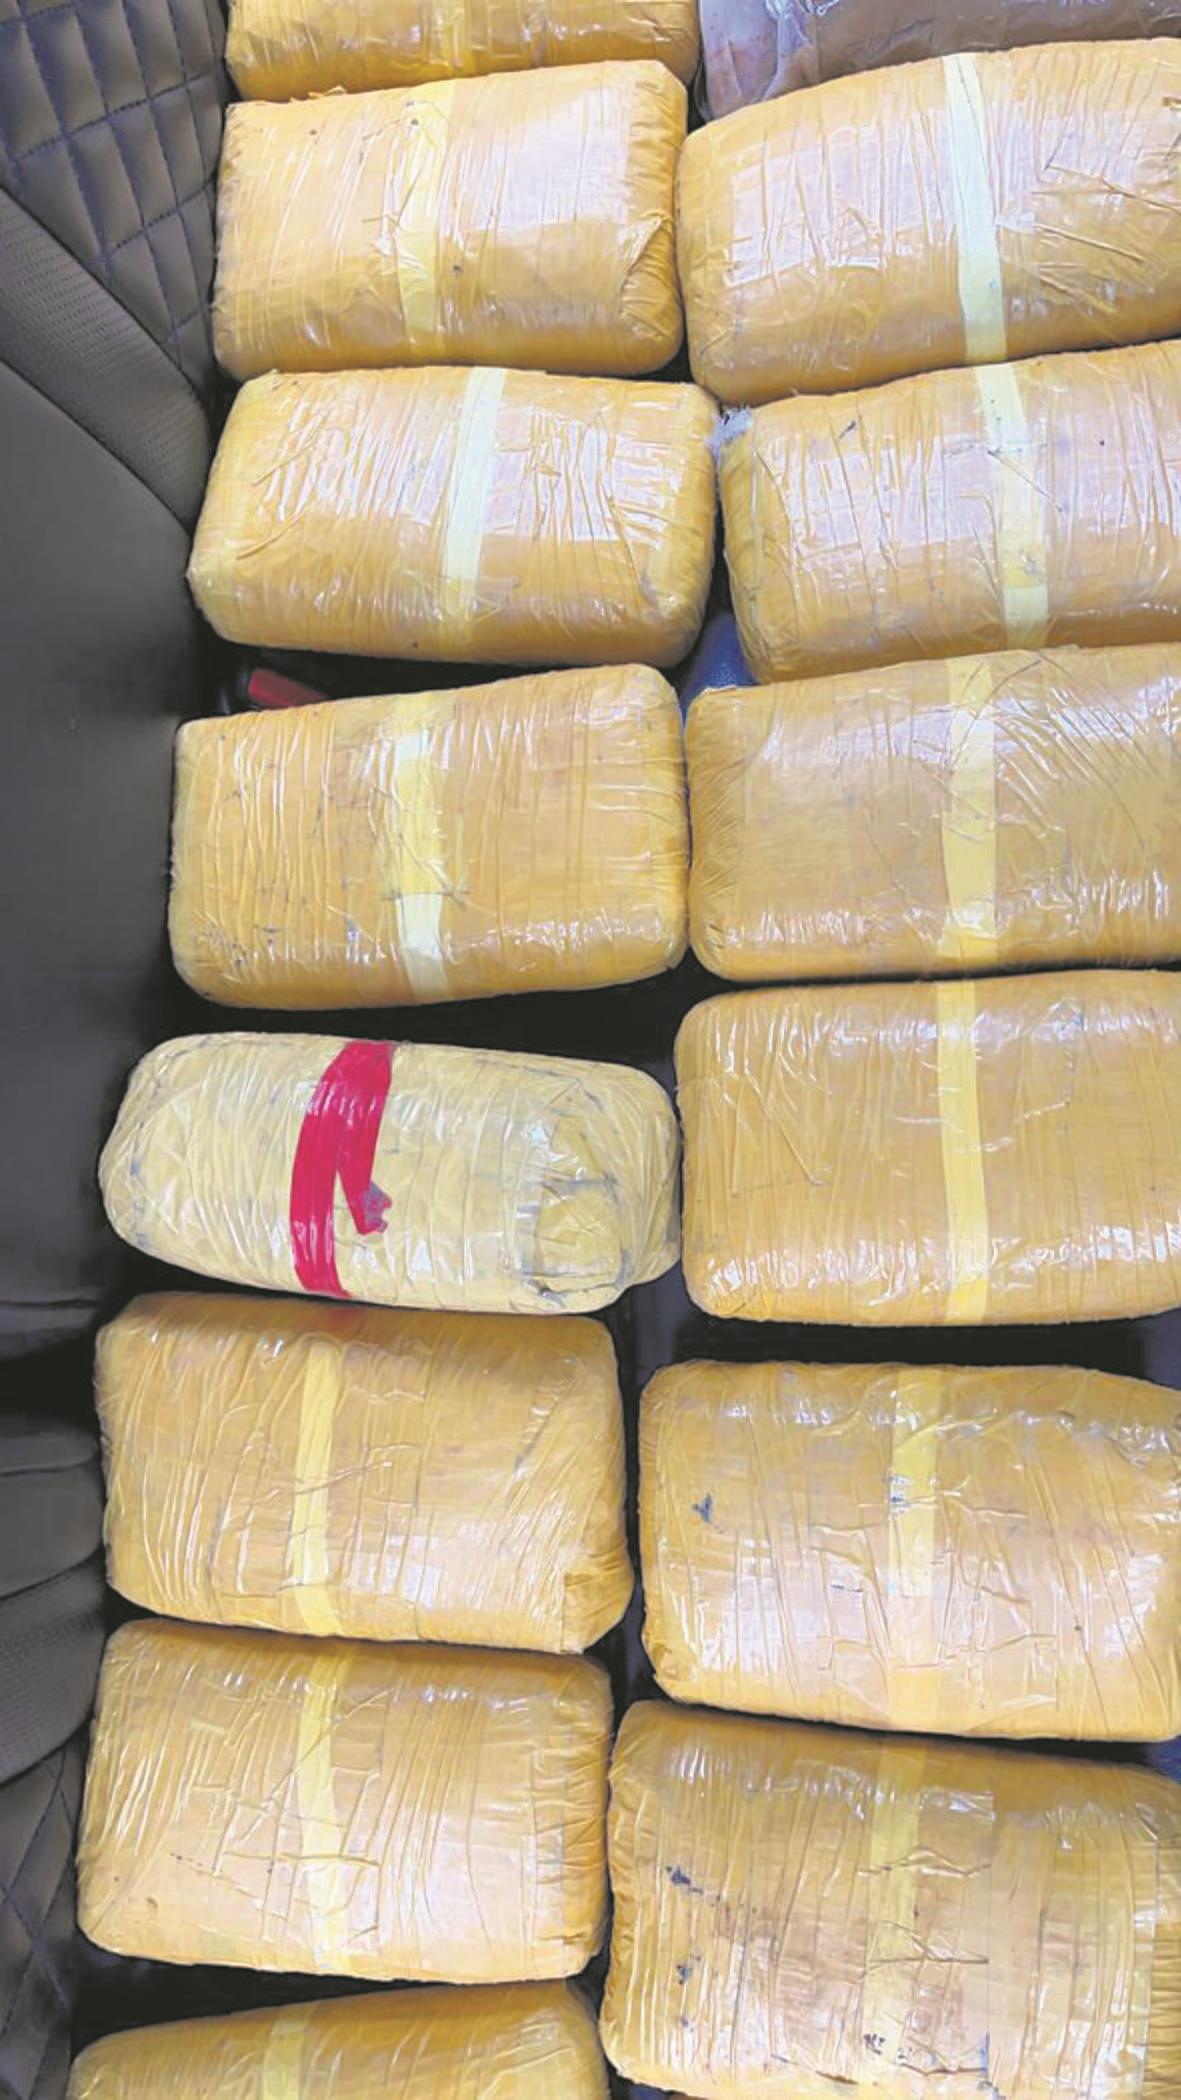 ED begins probe into  3,000-kg heroin haul in Gujarat